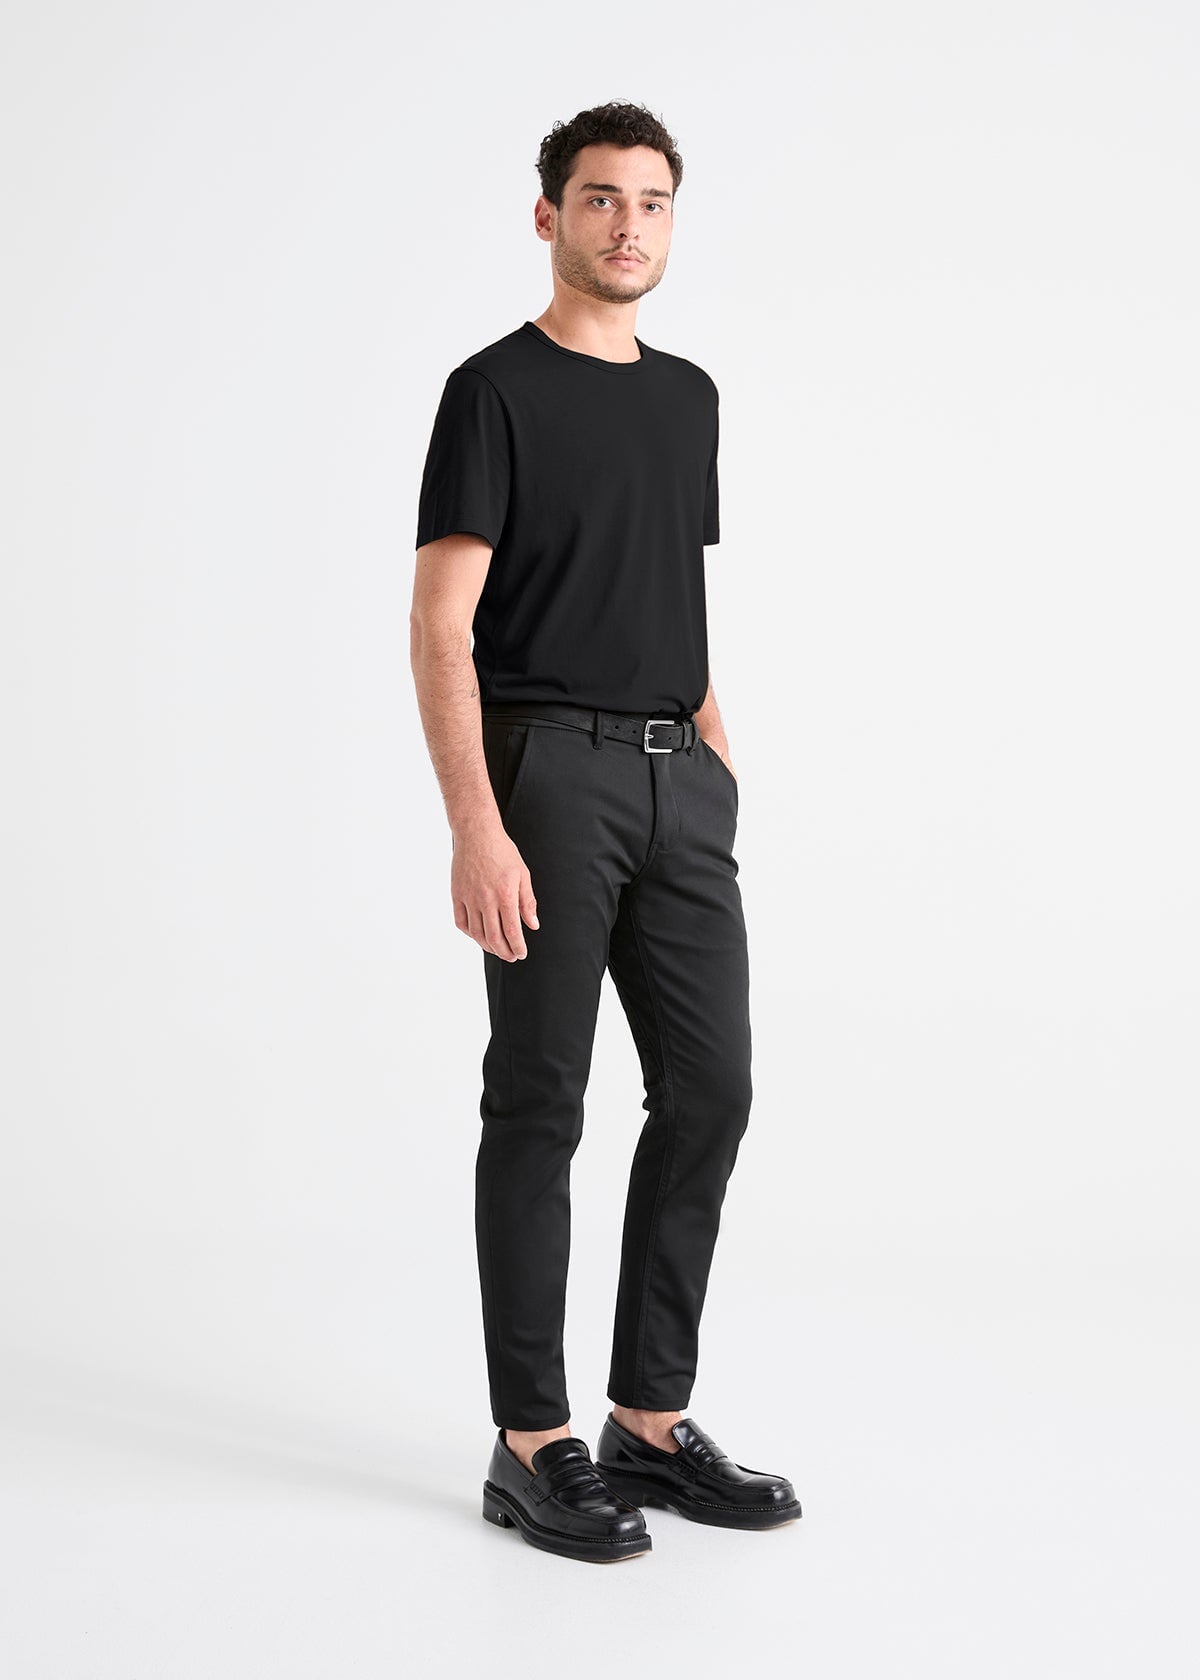 Men's Black Slim Fit Stretch Dress Pant Full Body